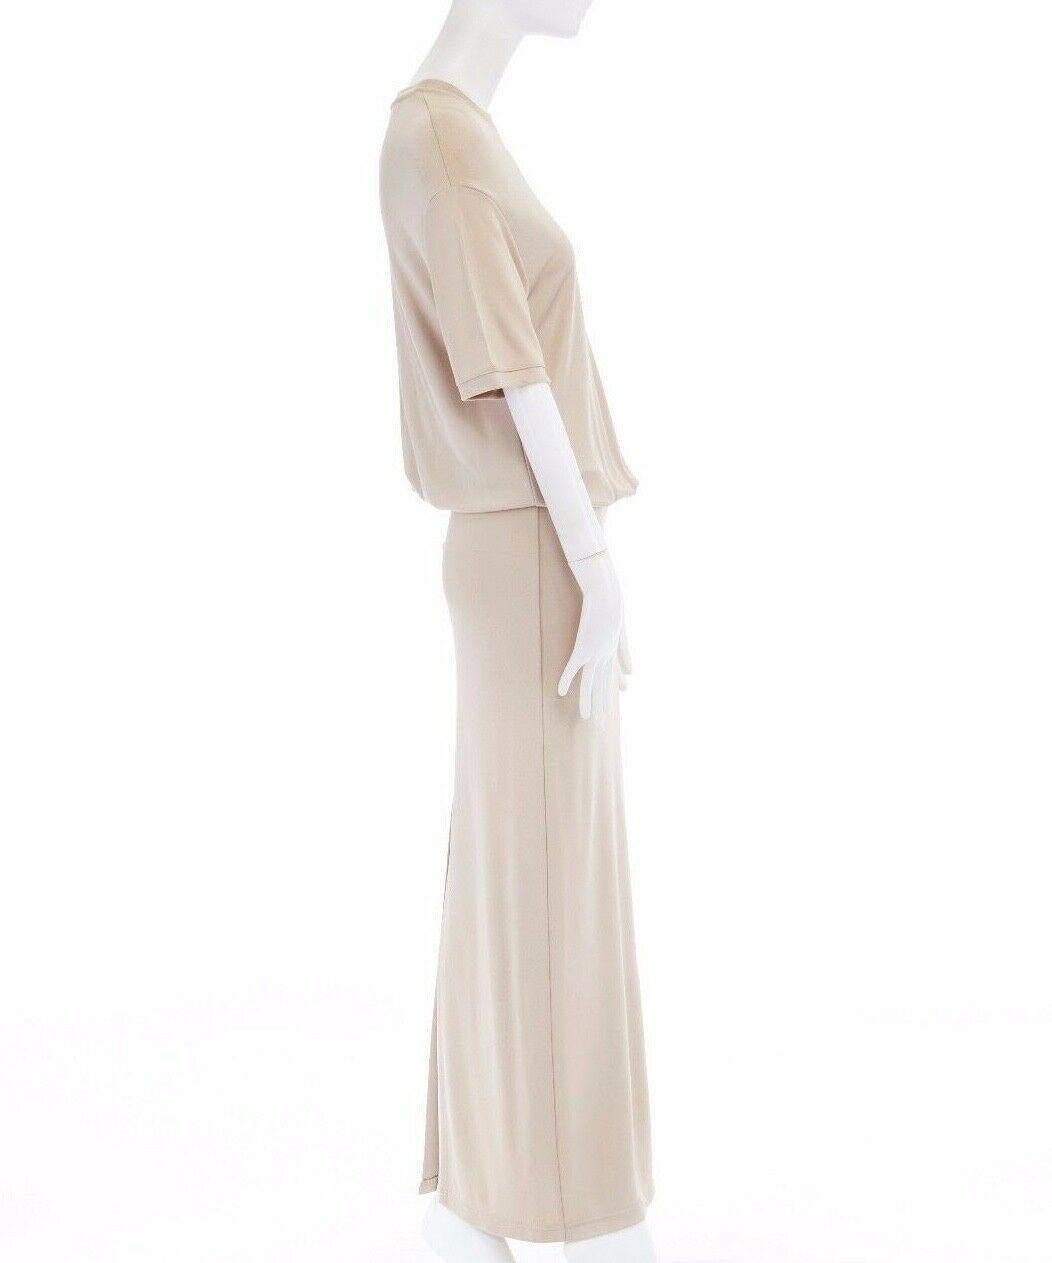 Beige GIVENCHY TISCI beige nude viscose loose tshirt maxi skirt design dress gown FR38